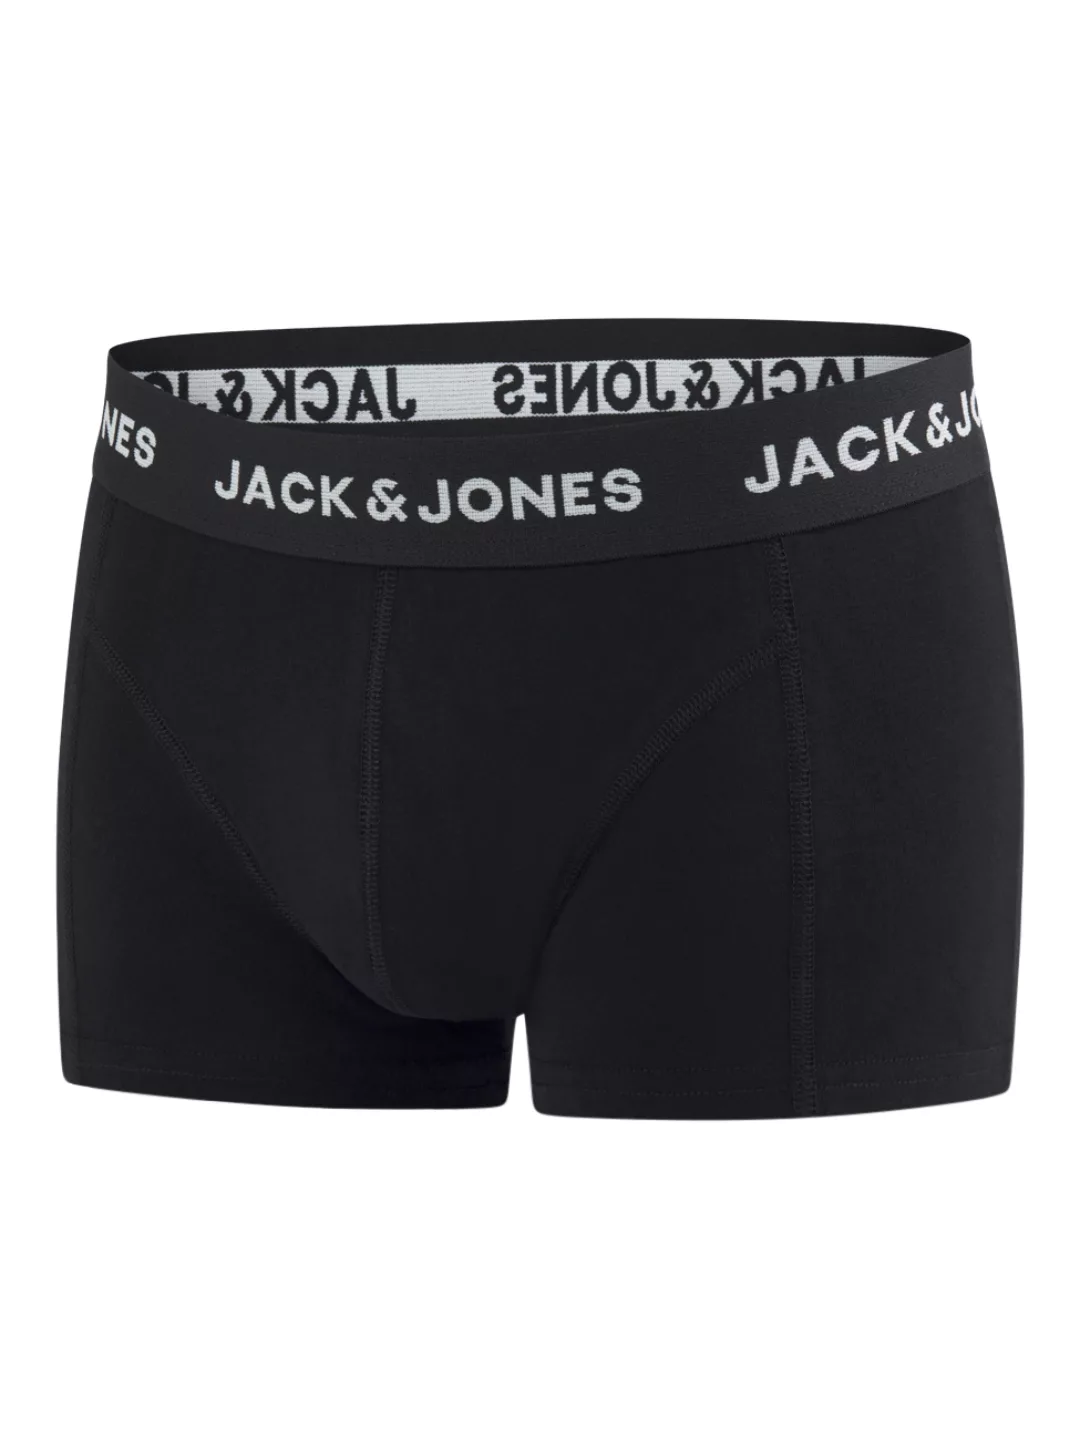 Jack & Jones Boxershorts Herren 6er Pack günstig online kaufen